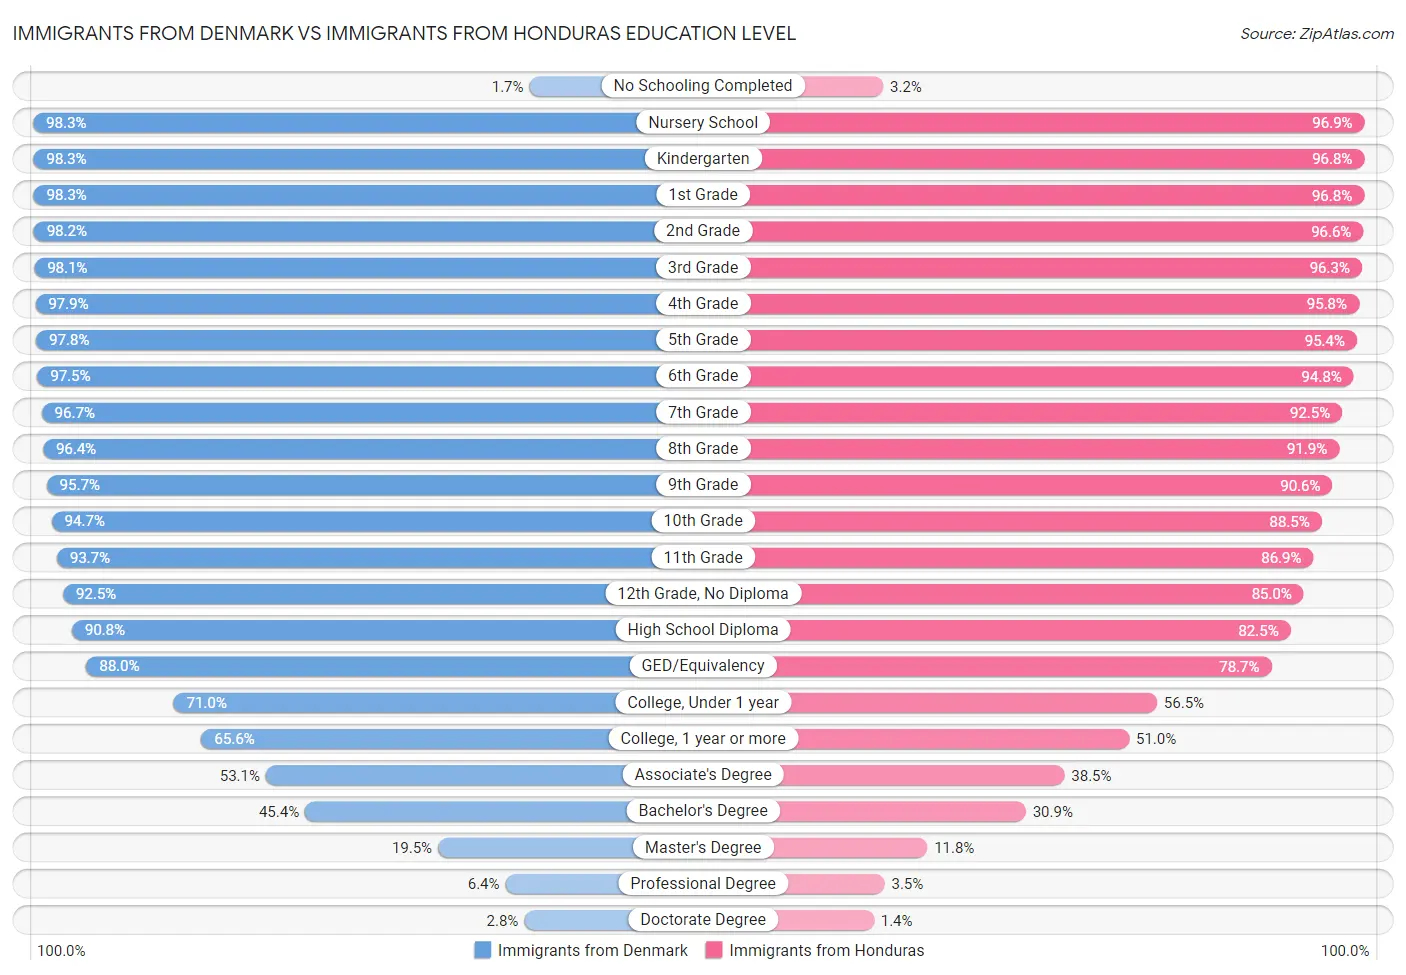 Immigrants from Denmark vs Immigrants from Honduras Education Level